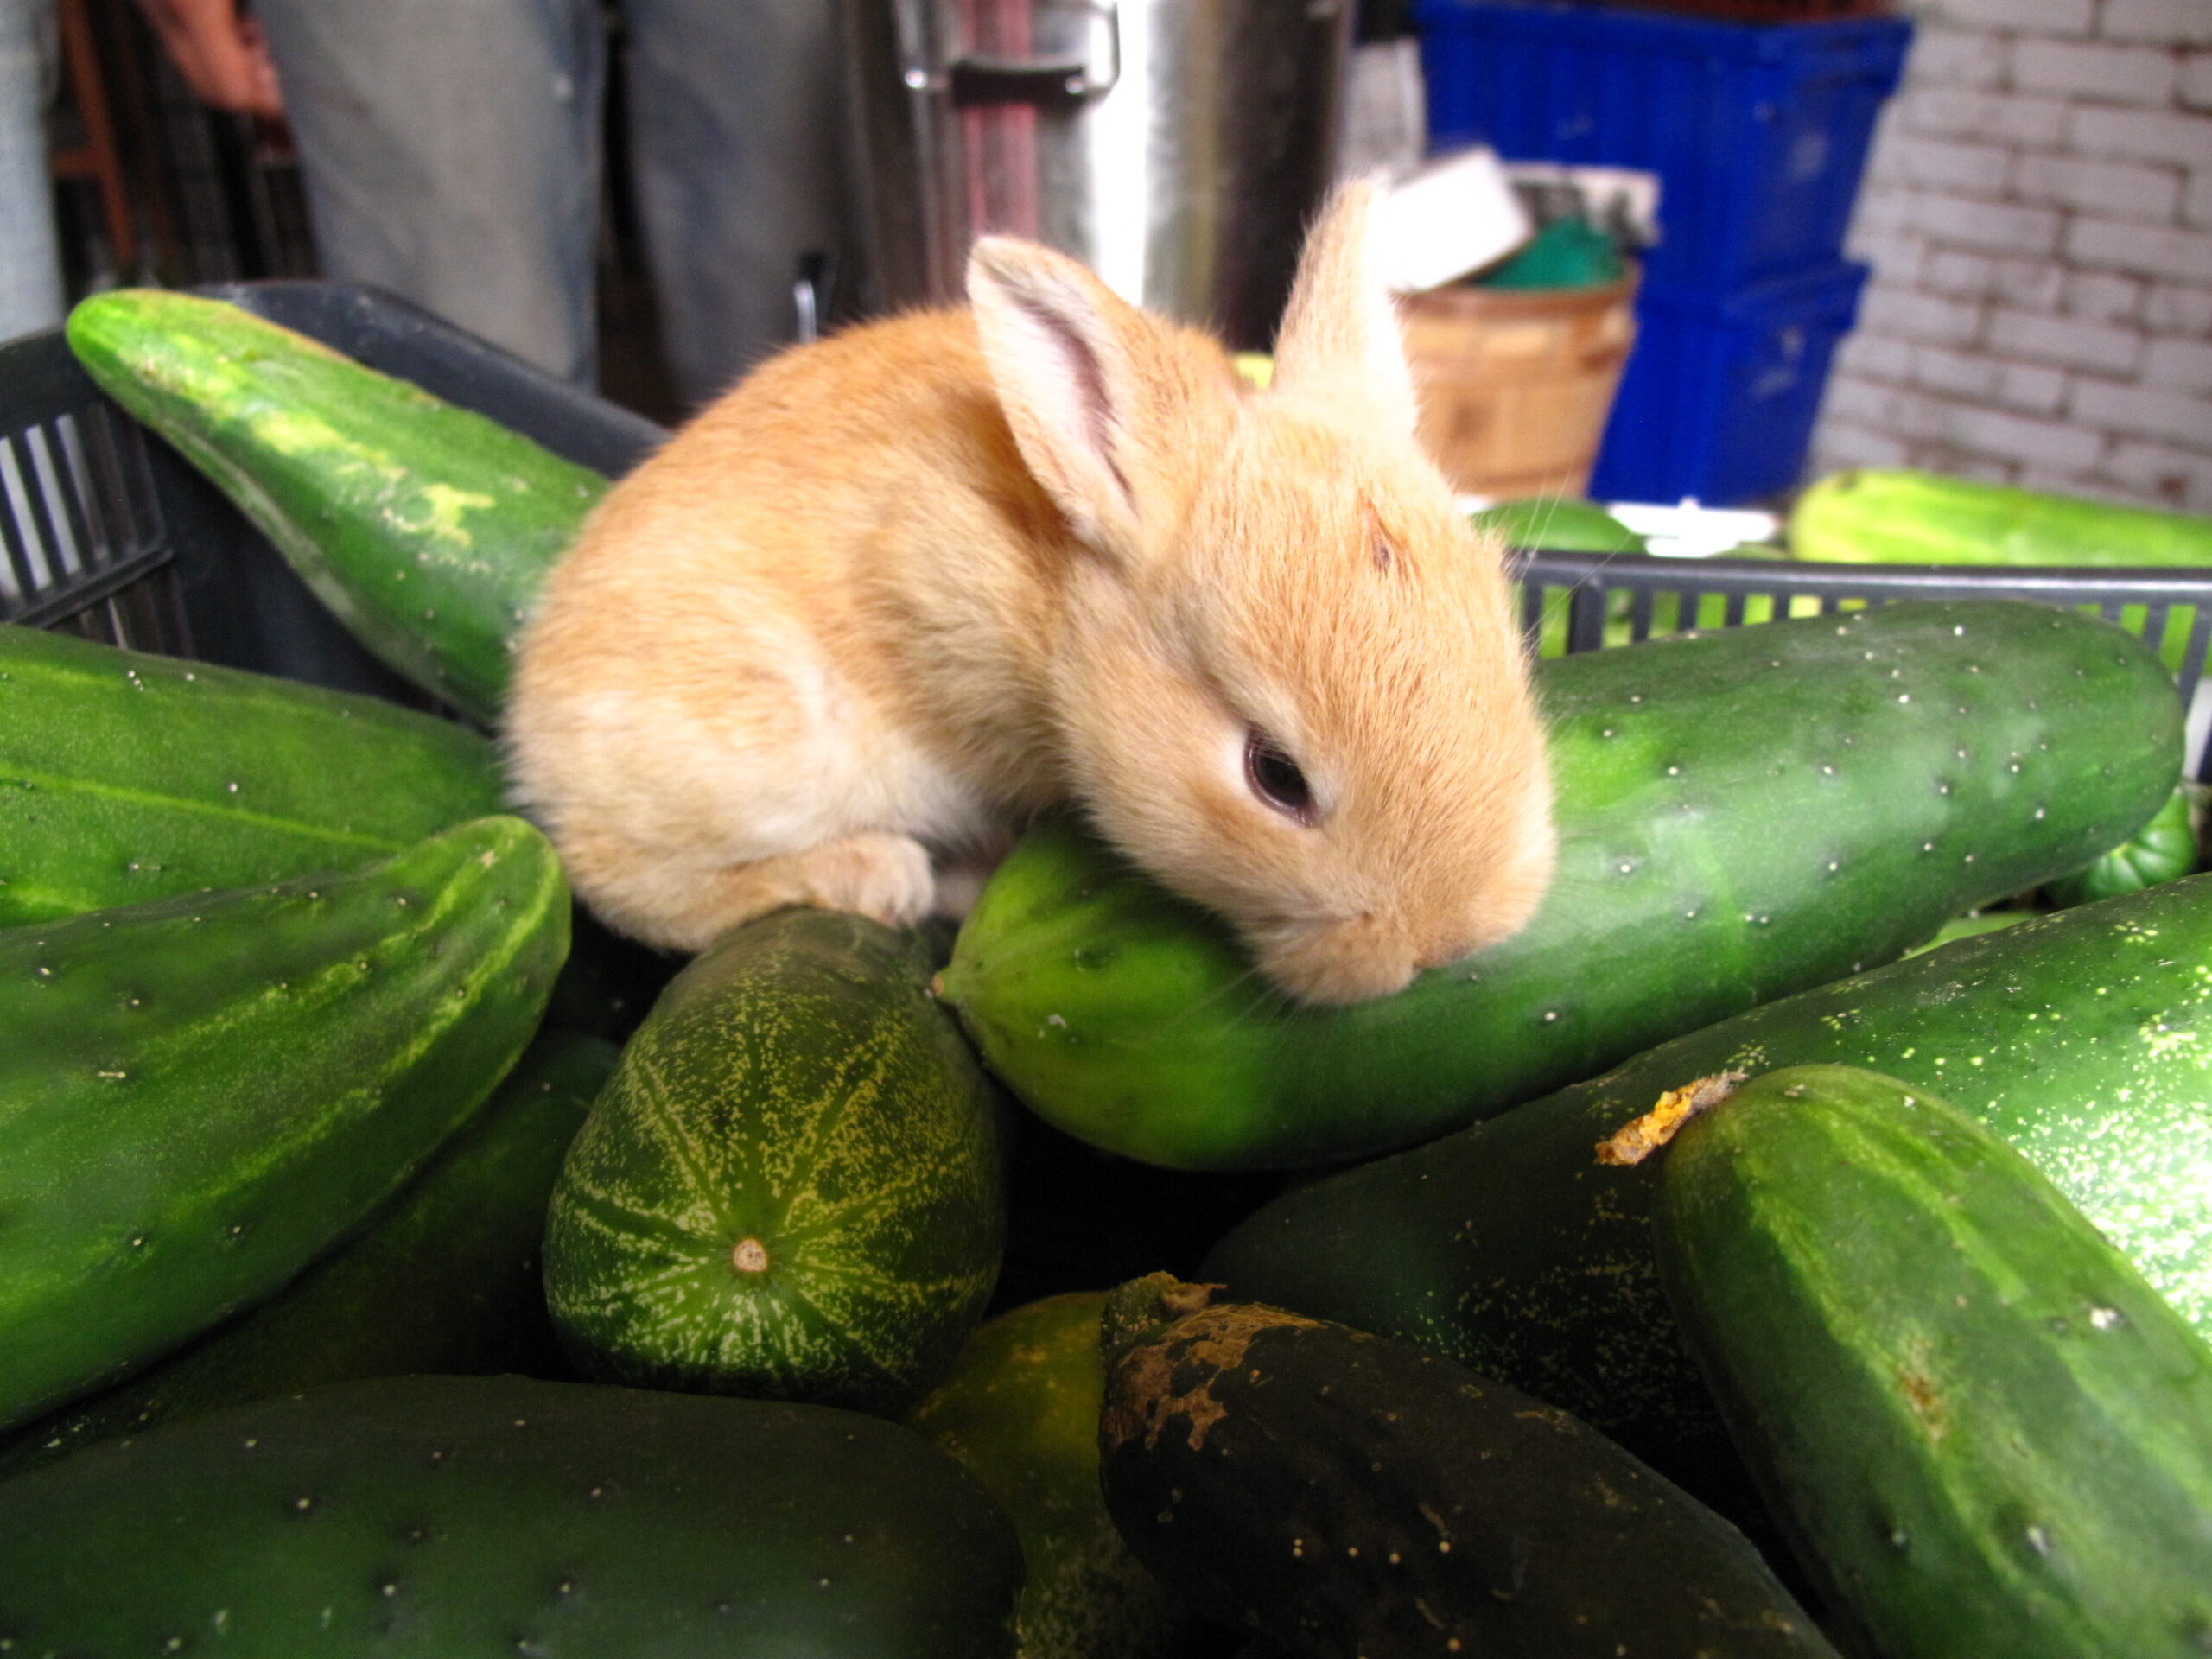 Rabbit eat cucumber thumbnail